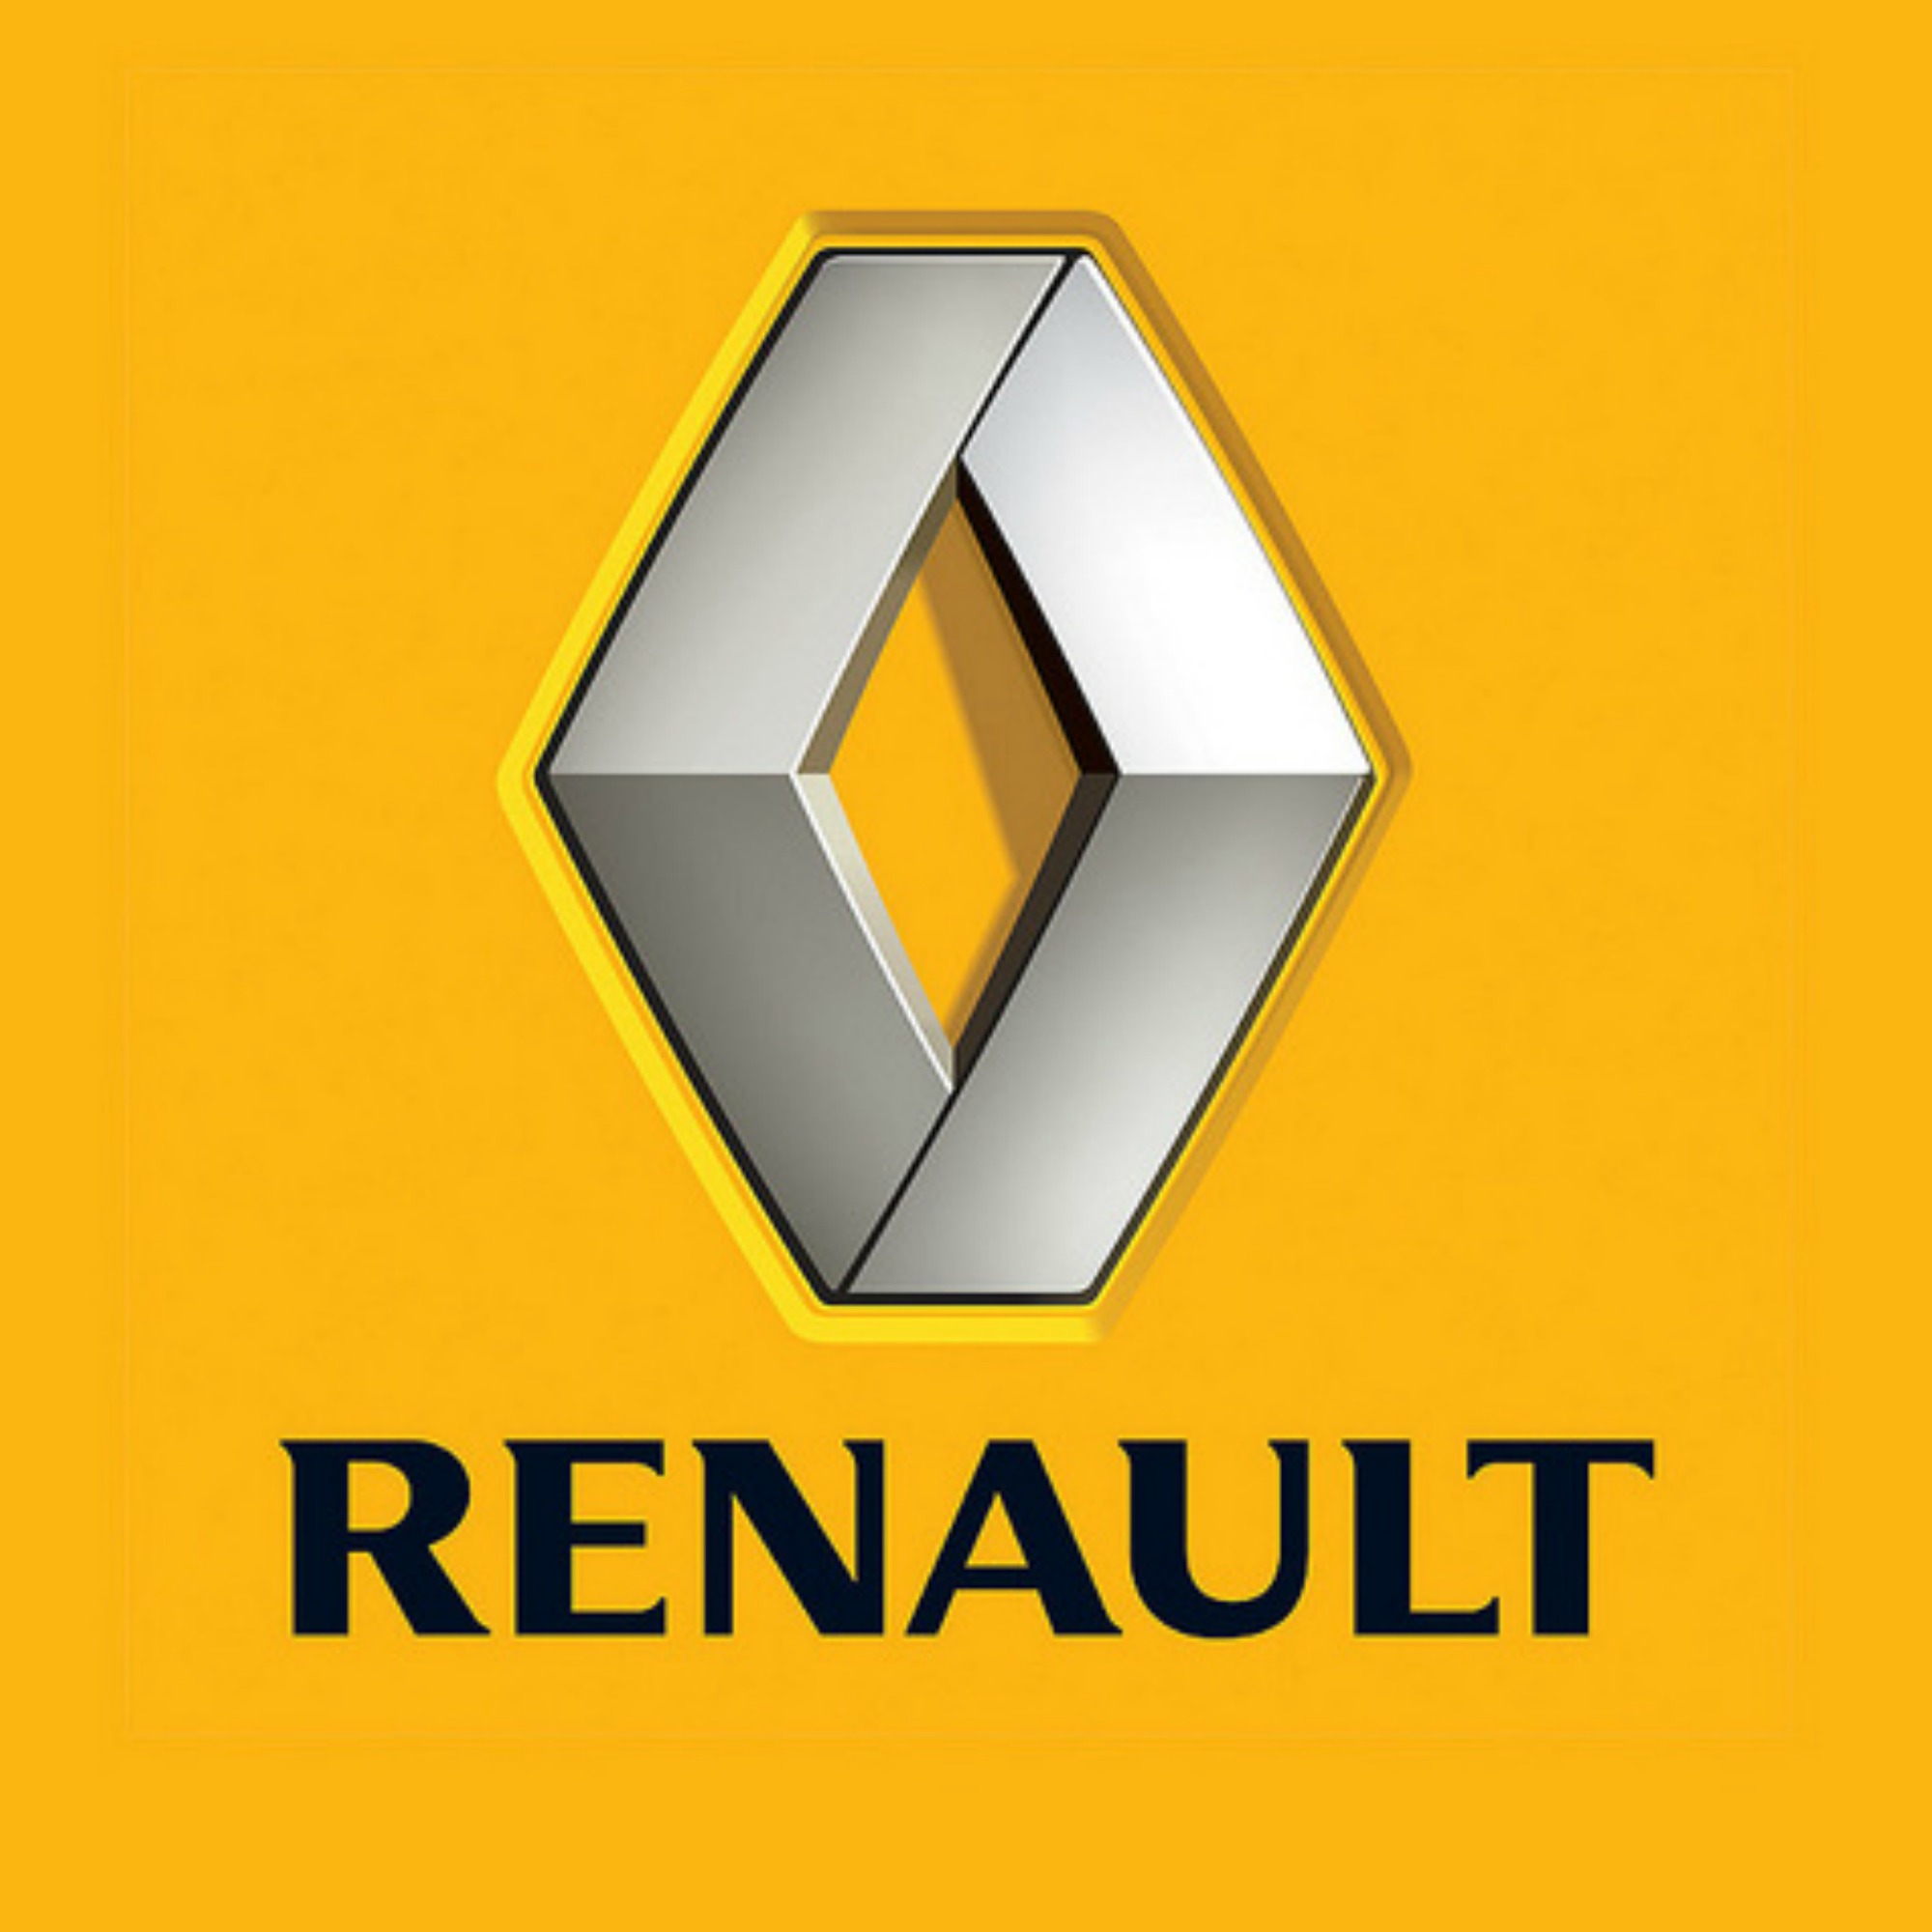 Talleres Ginestar S.L.U. (Renault y Dacia)